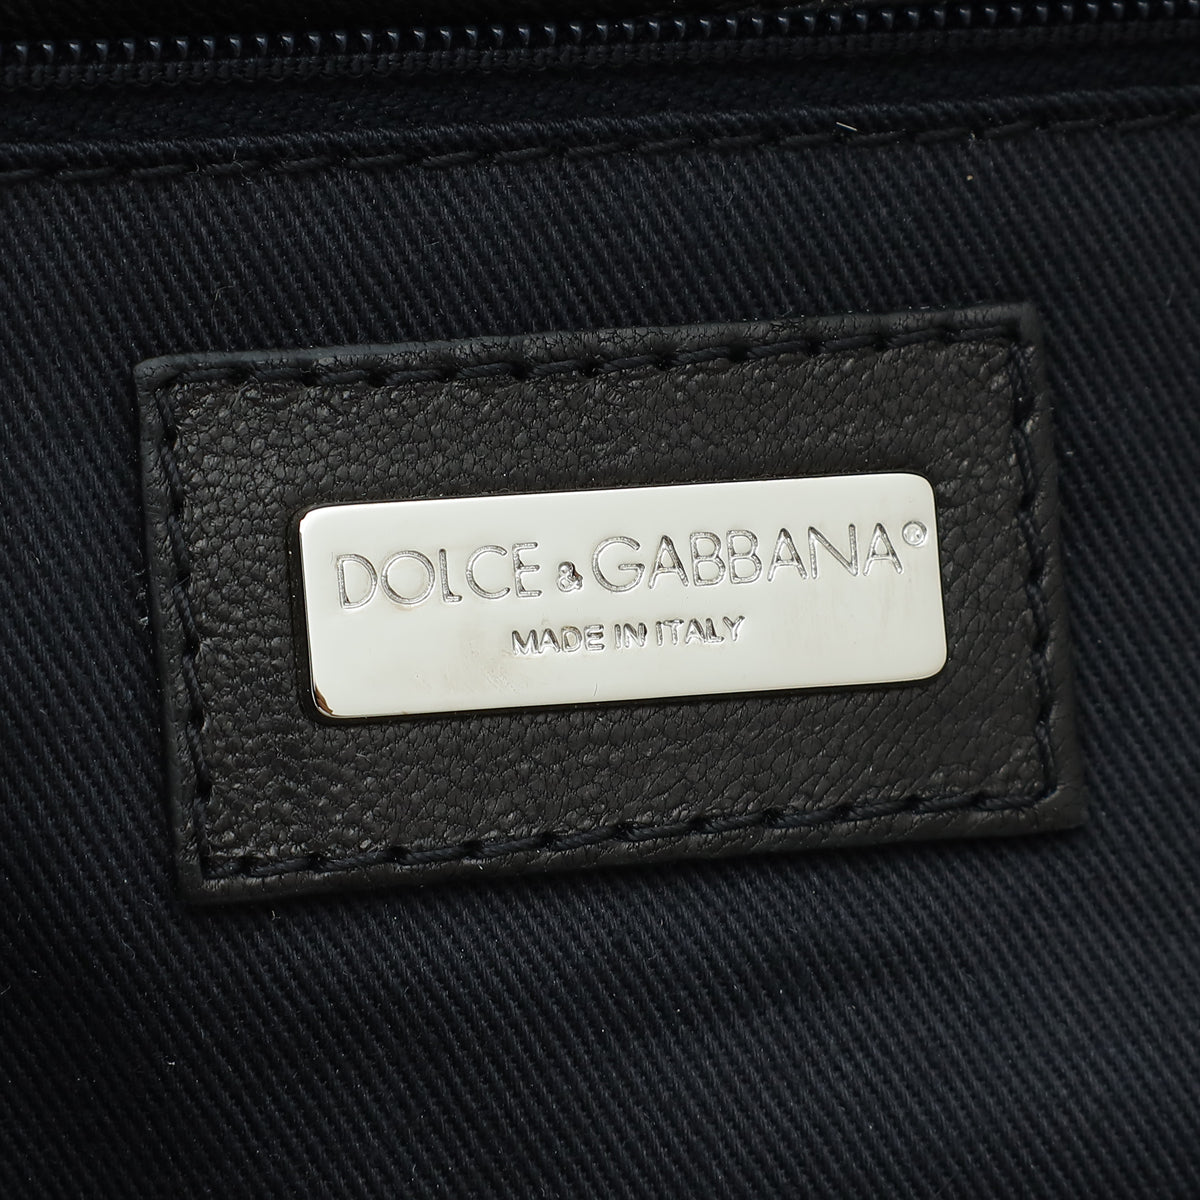 Dolce & Gabbana Bicolor Zebra Print Pony Hair Miss Charles Bag